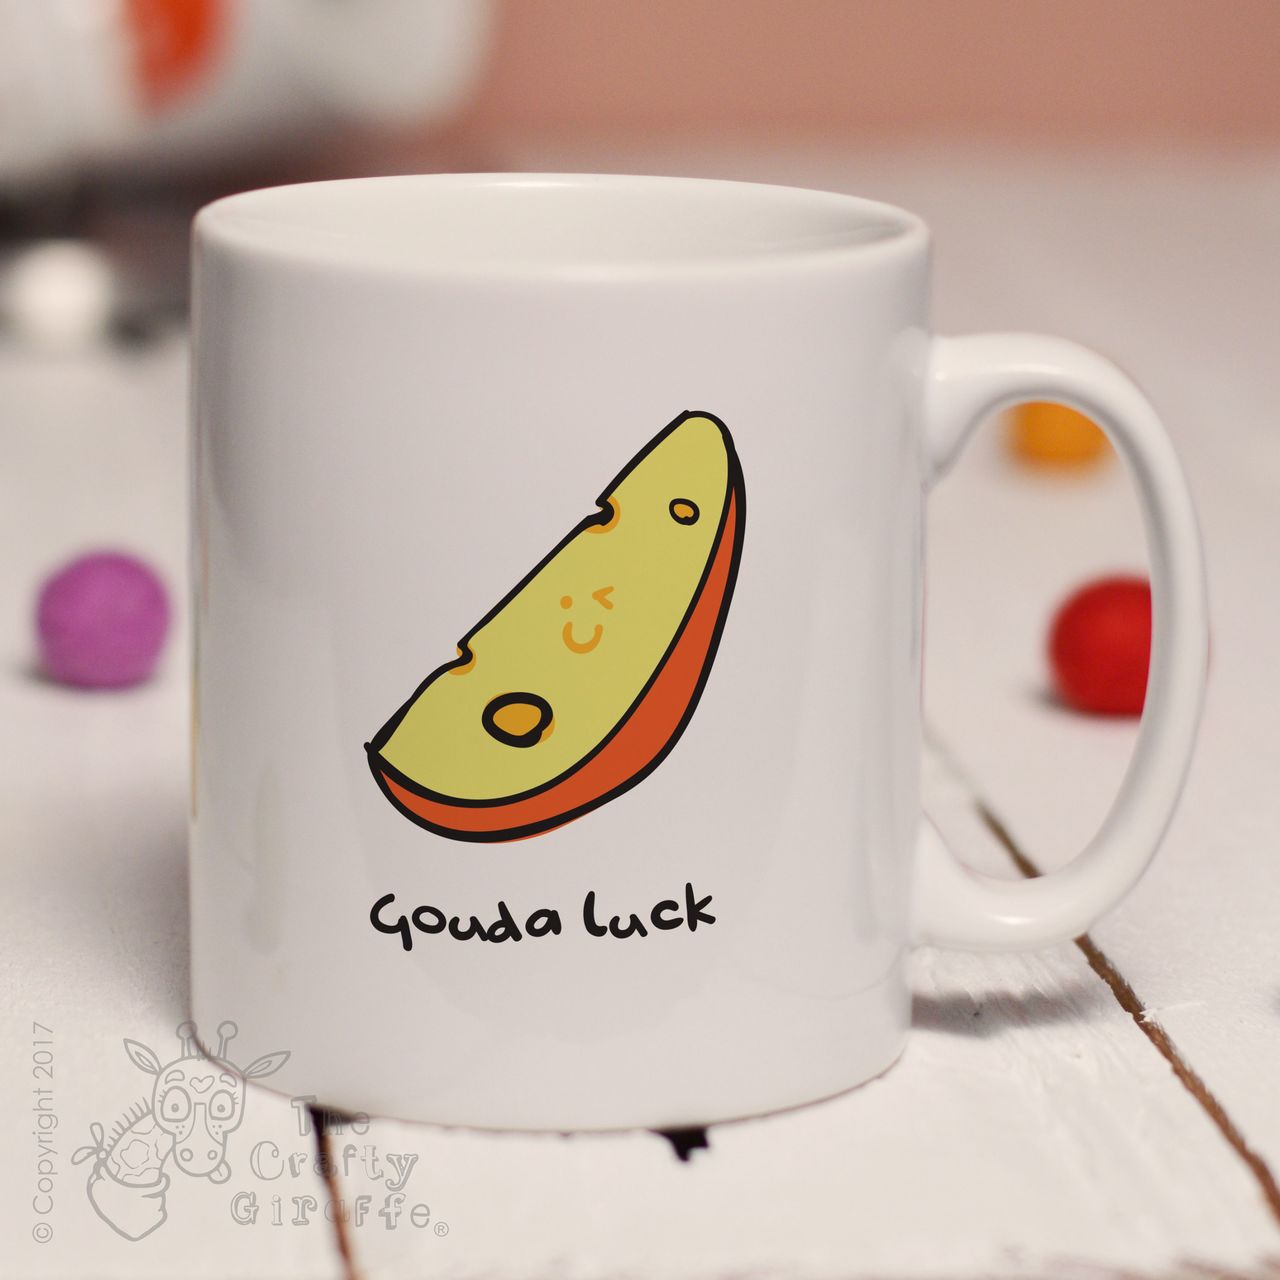 Gouda Luck mug